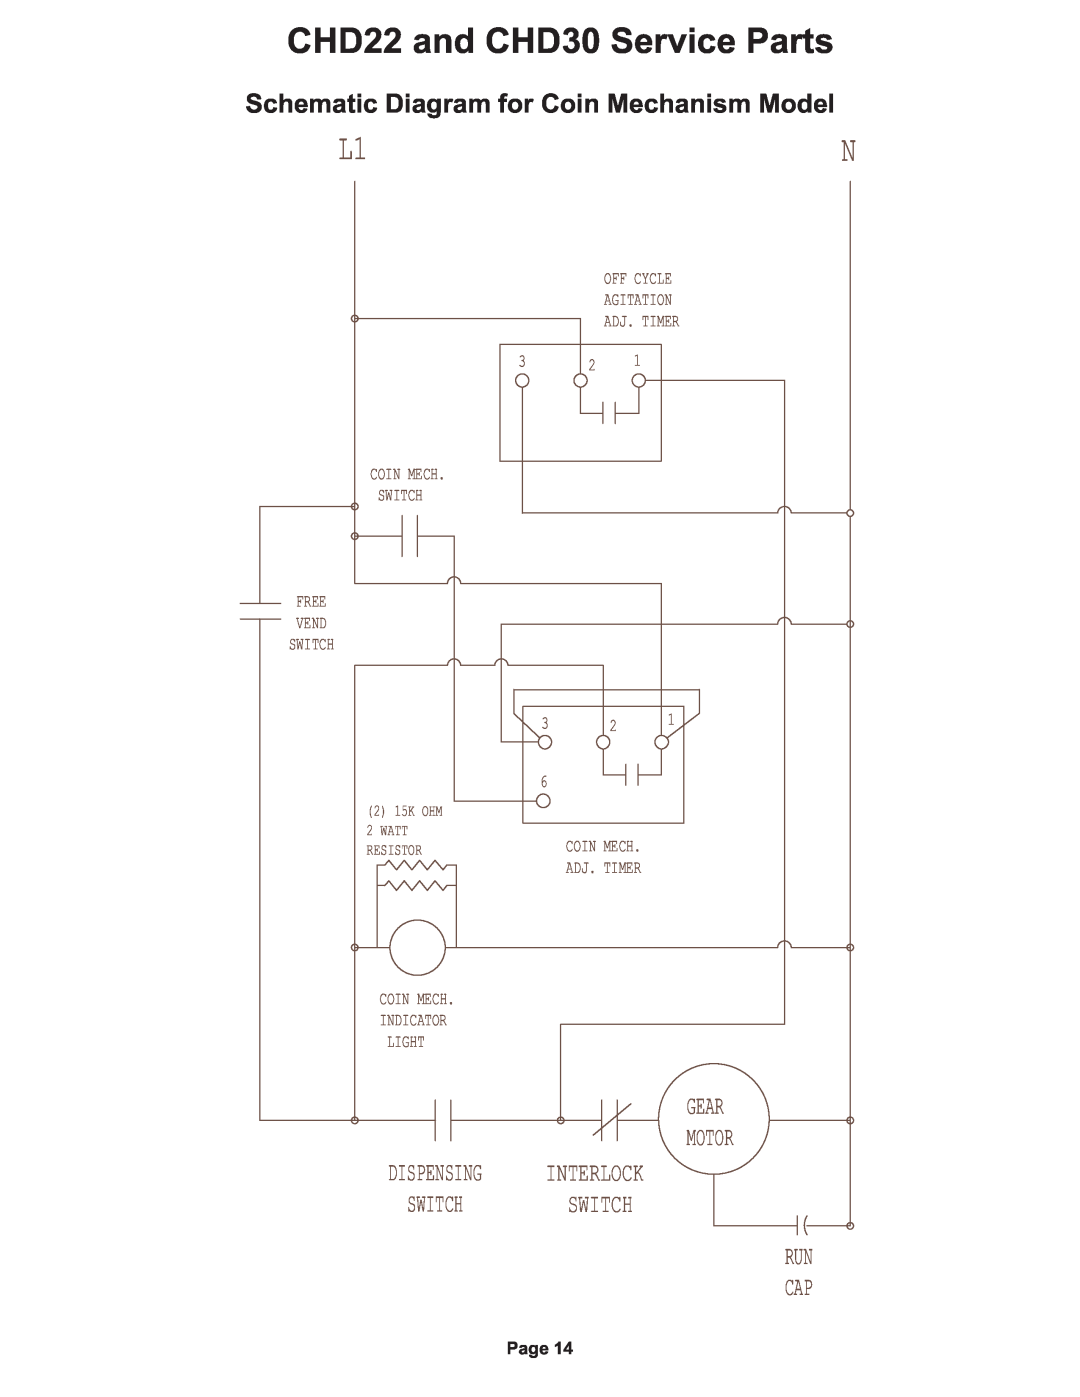 Cornelius CHD22 and CHD30 Service Parts, Schematic Diagram for Coin Mechanism Model, Switch, Run Cap, Dispensing, Light 